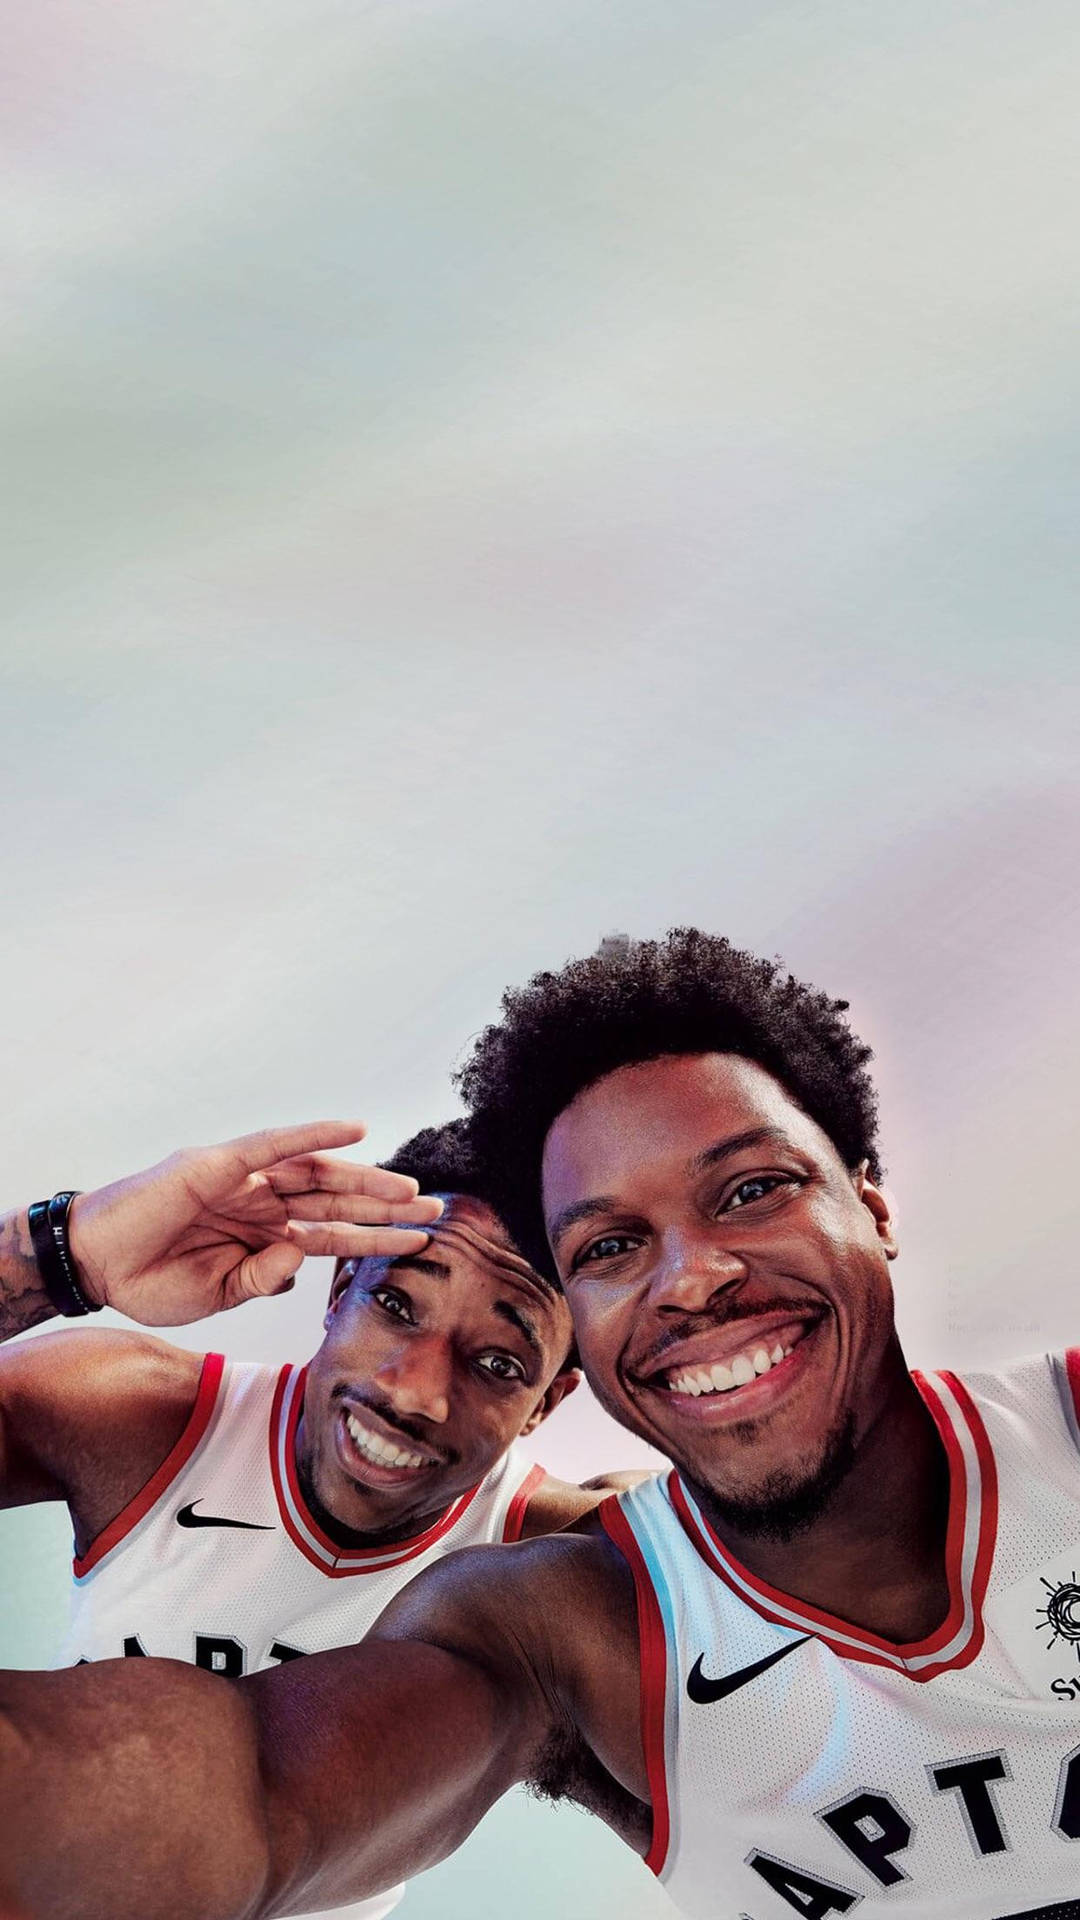 Nba Stars Kyle Lowry And Demar Derozan Sharing A Light Moment With A Selfie.